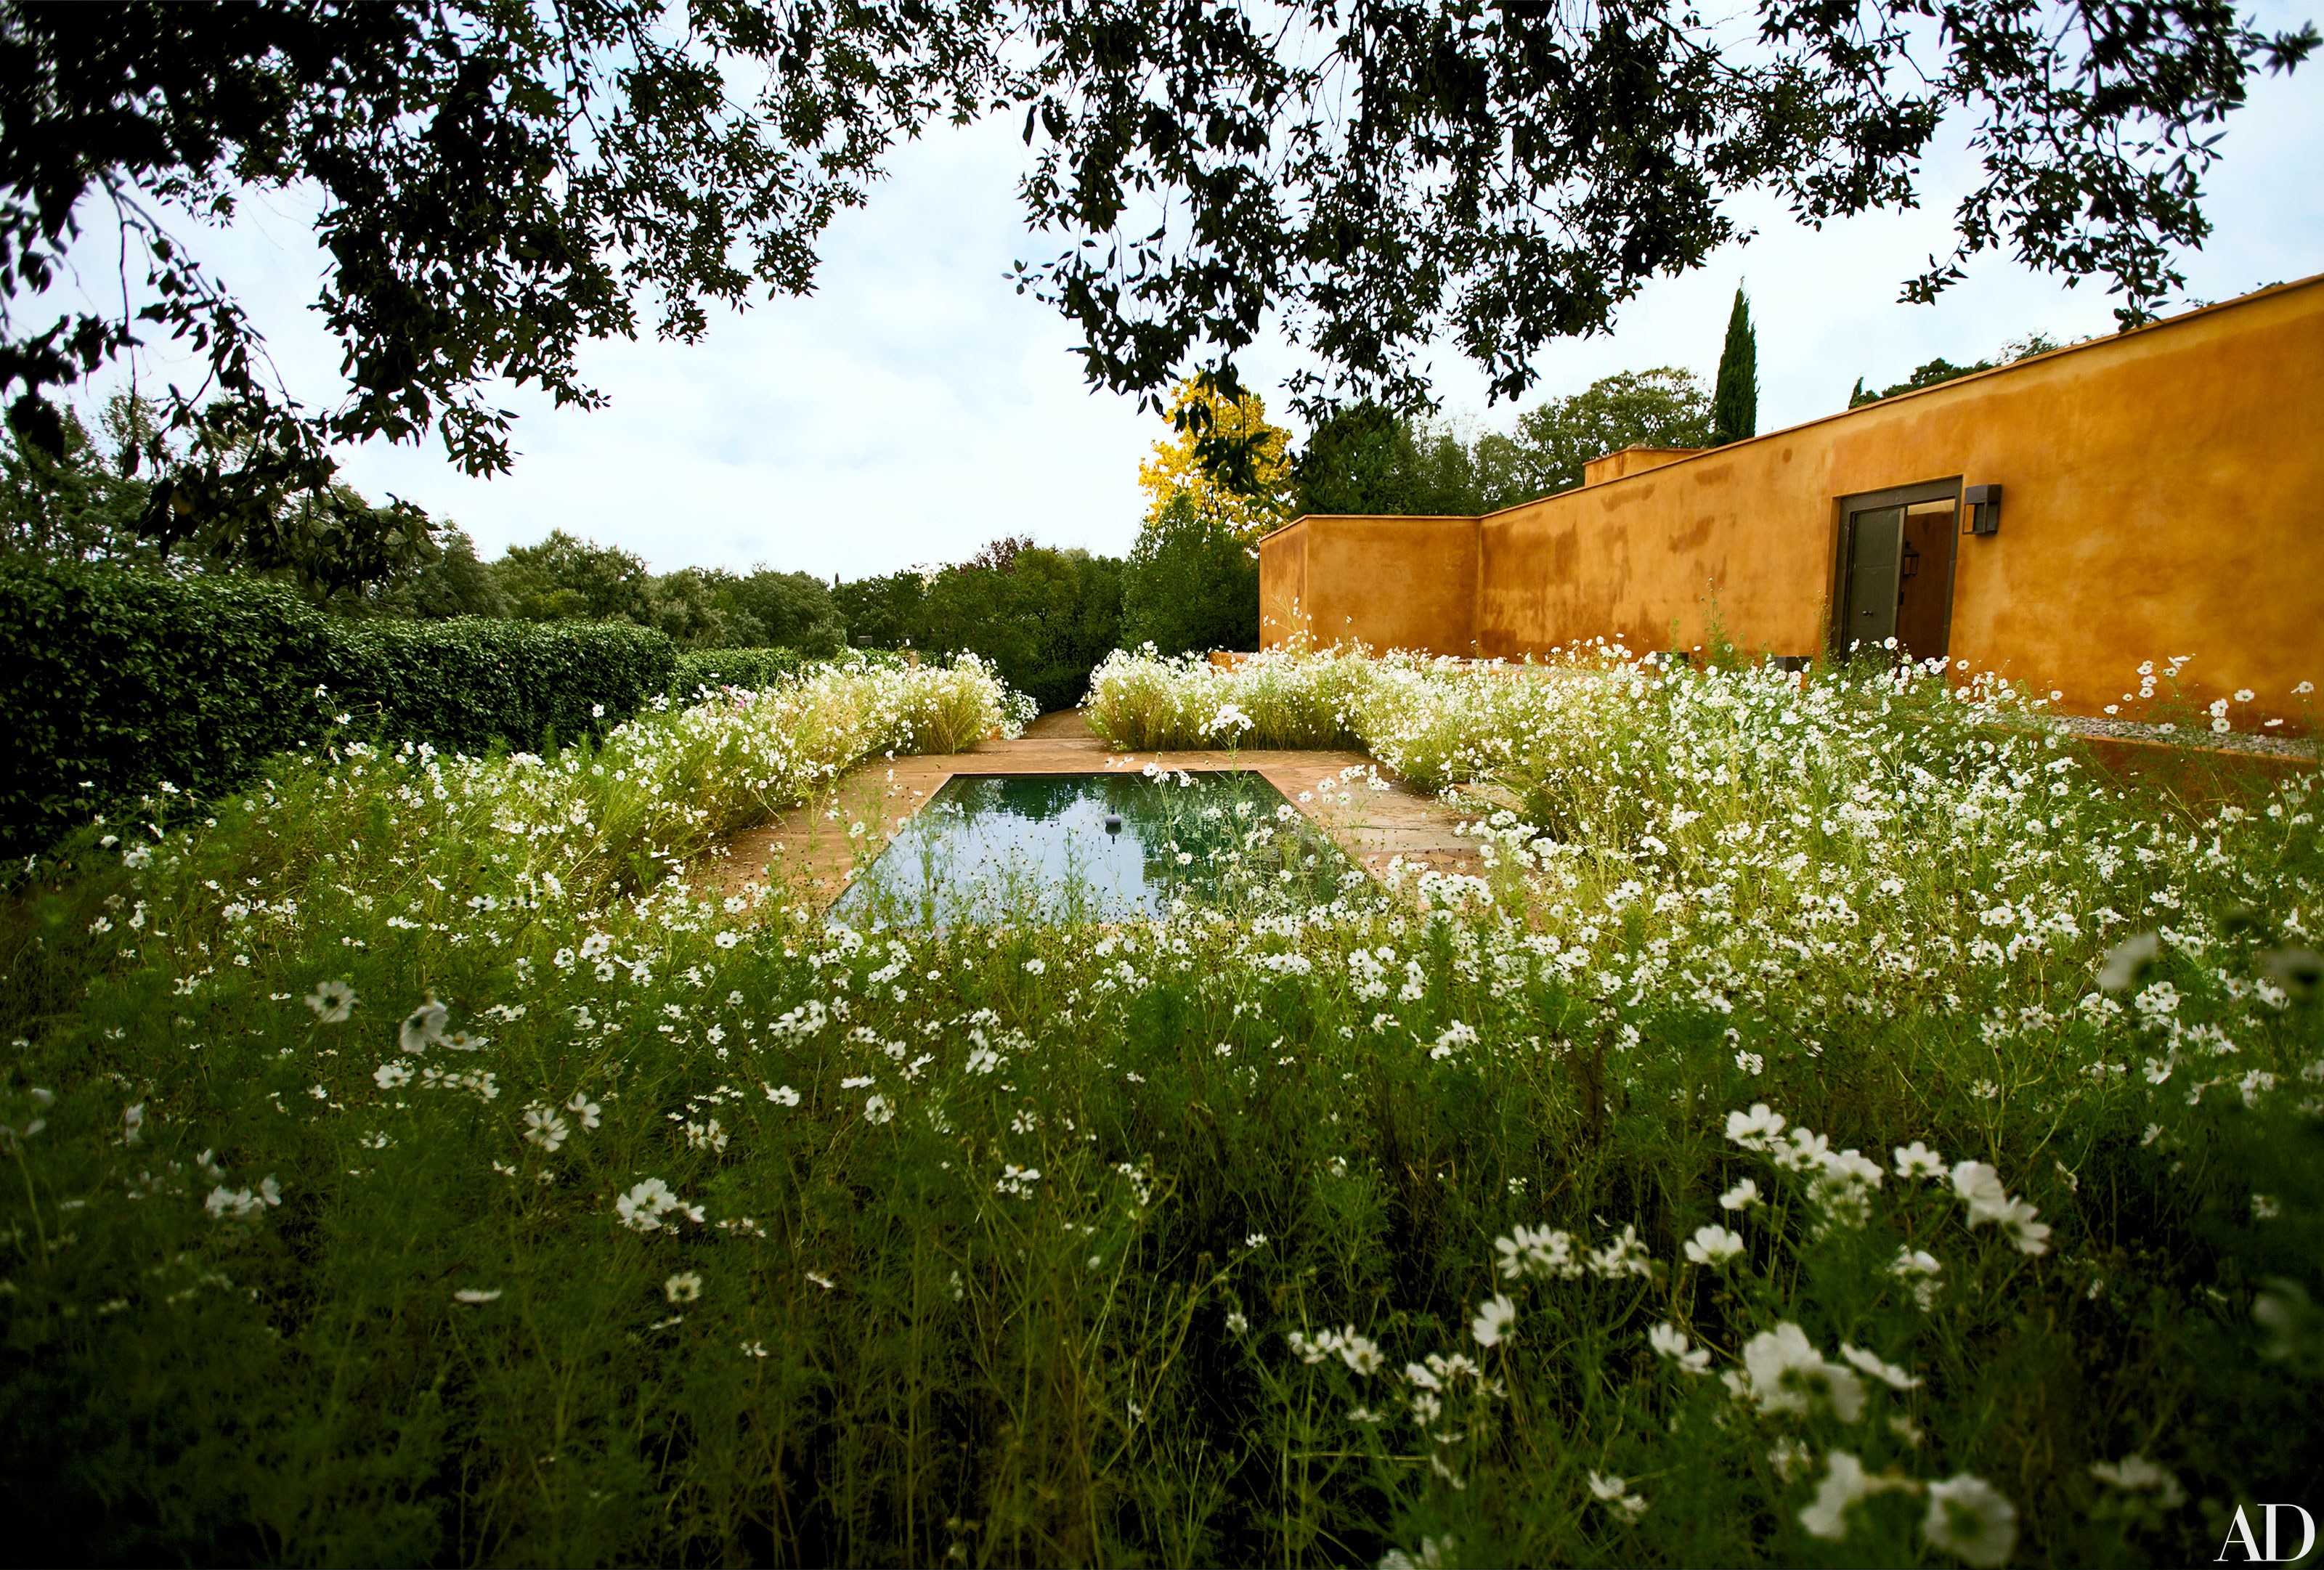 Fernando Caruncho's Famous Green Garden in Madrid | Architectural Digest